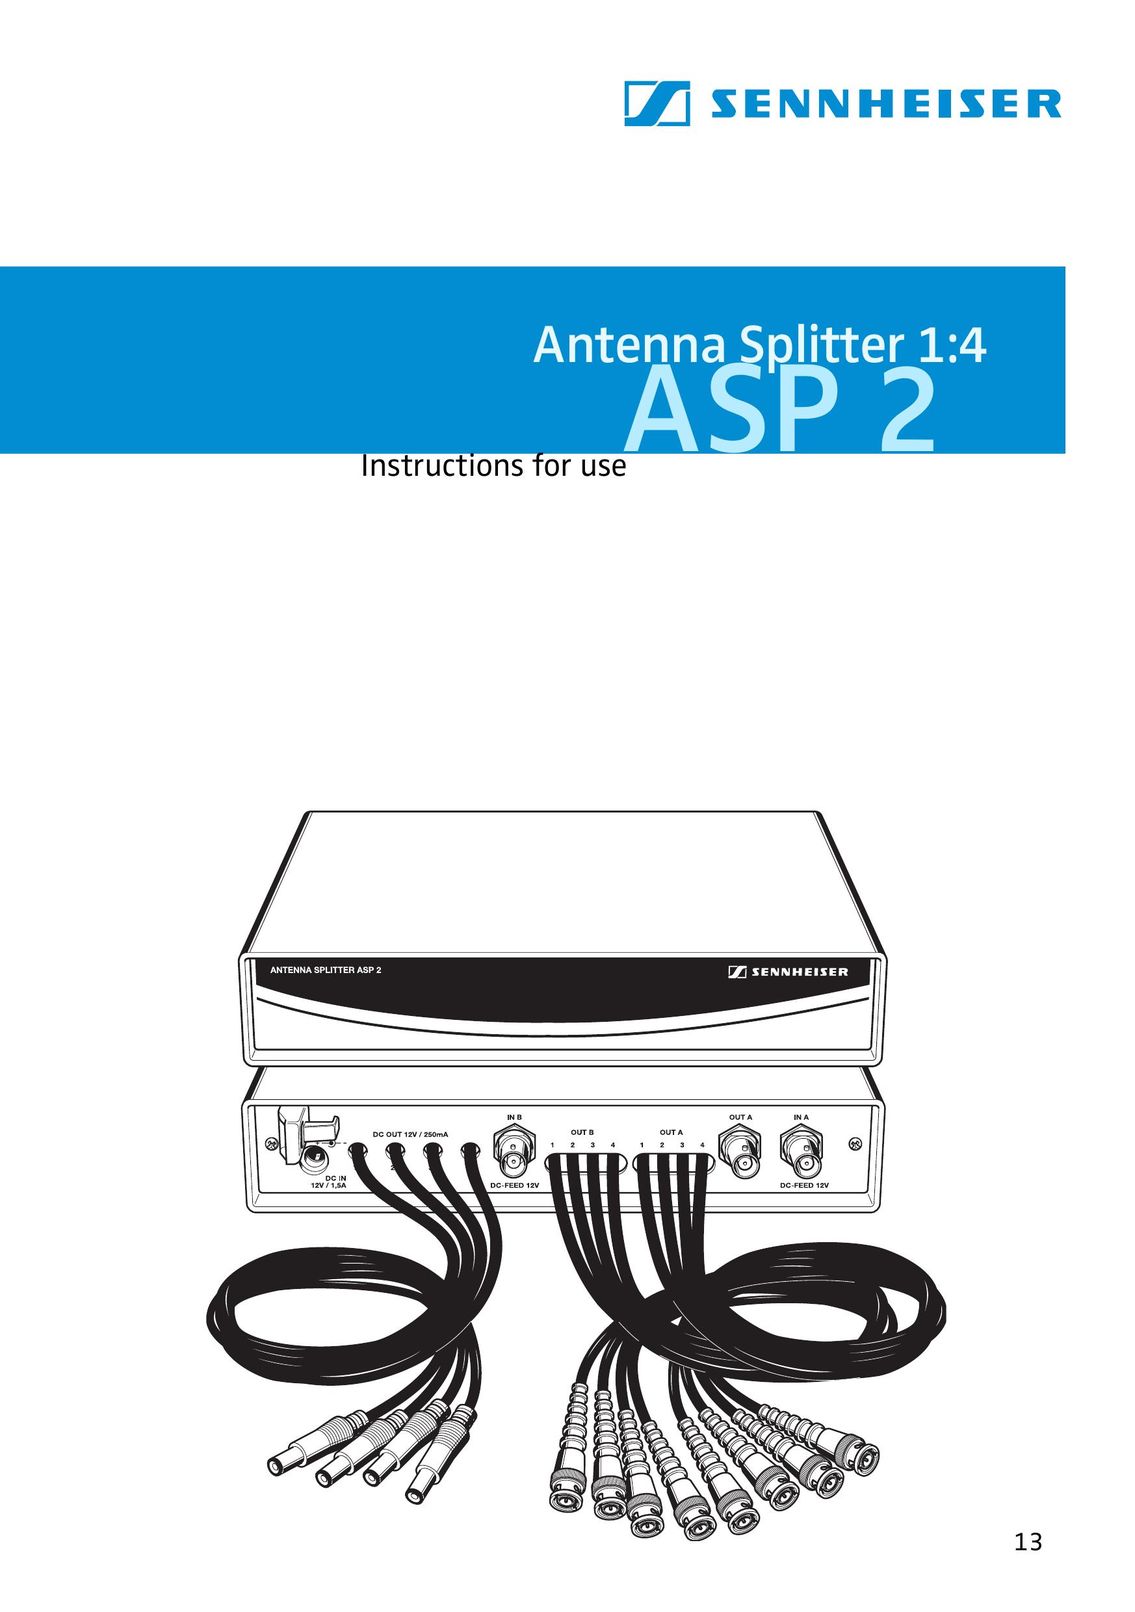 Sennheiser ASP 2 Radio Antenna User Manual